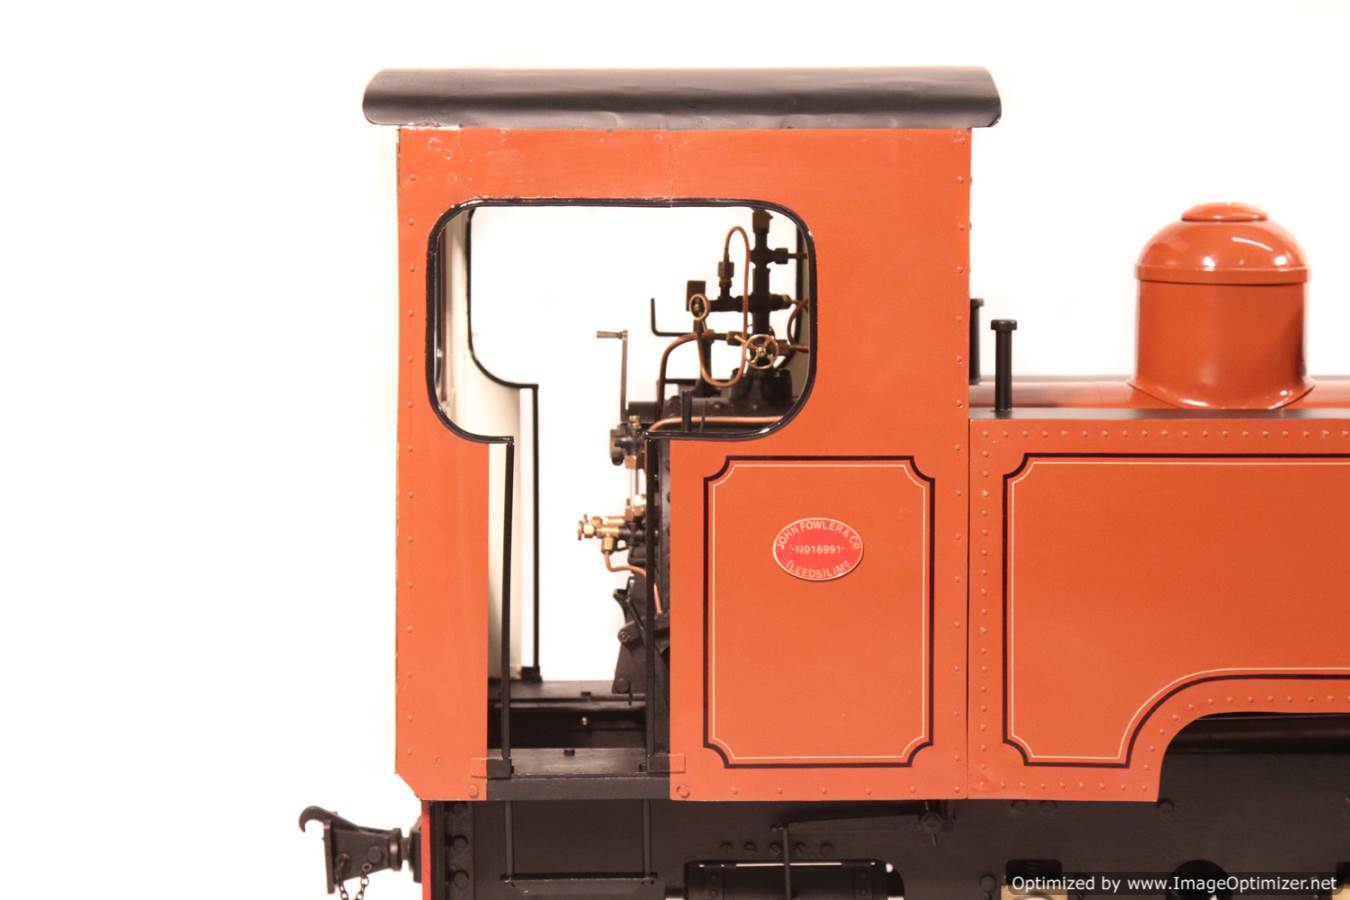 test 5 inch Gauge Fowler Live Steam Locomotive for sale 09 Optimized